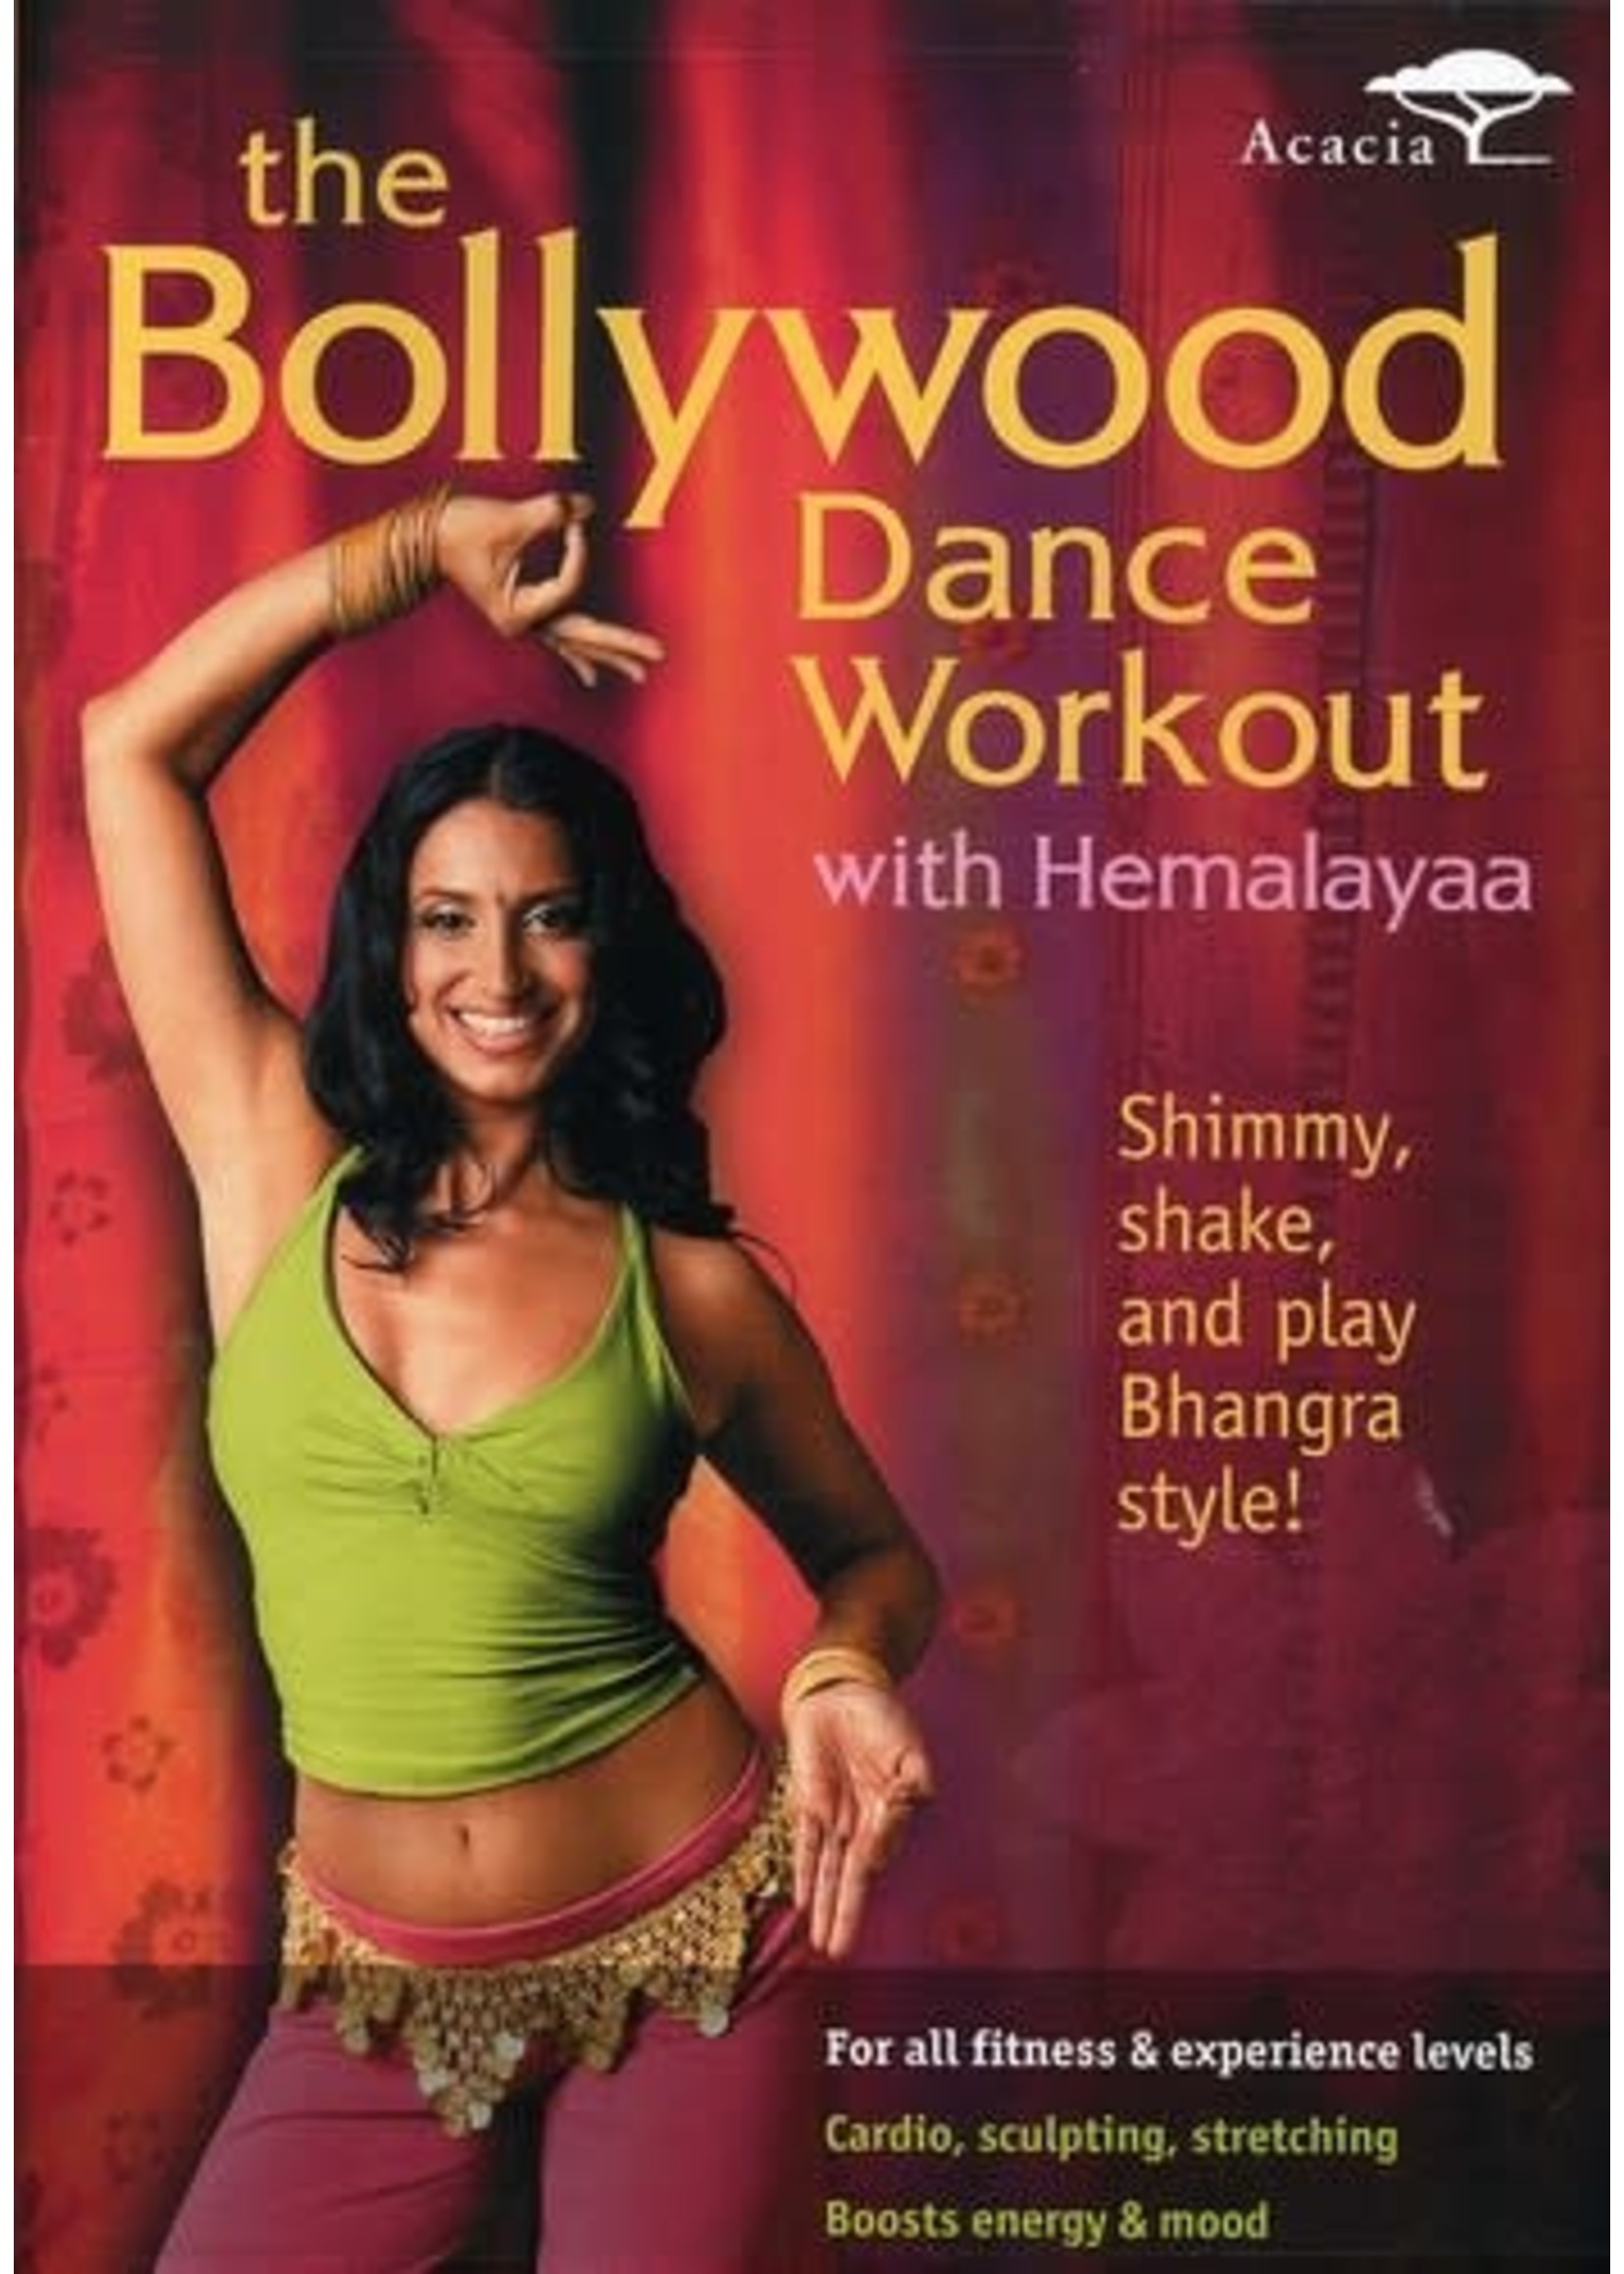 Bollywood Dance Workout with Hemalayaa DVD